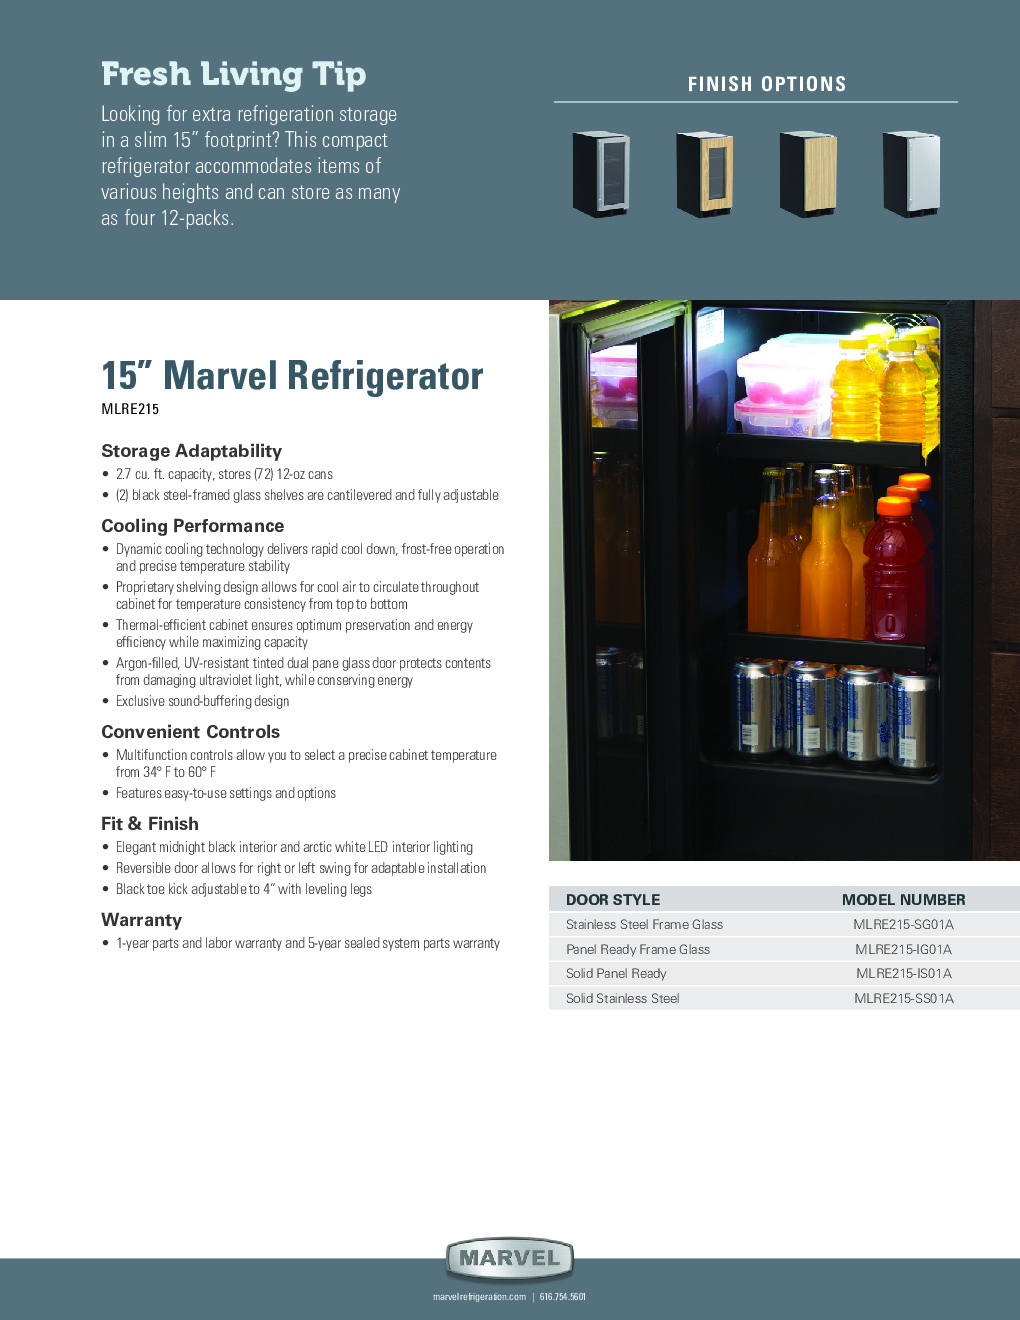 Marvel MLRE215-SG01A 15